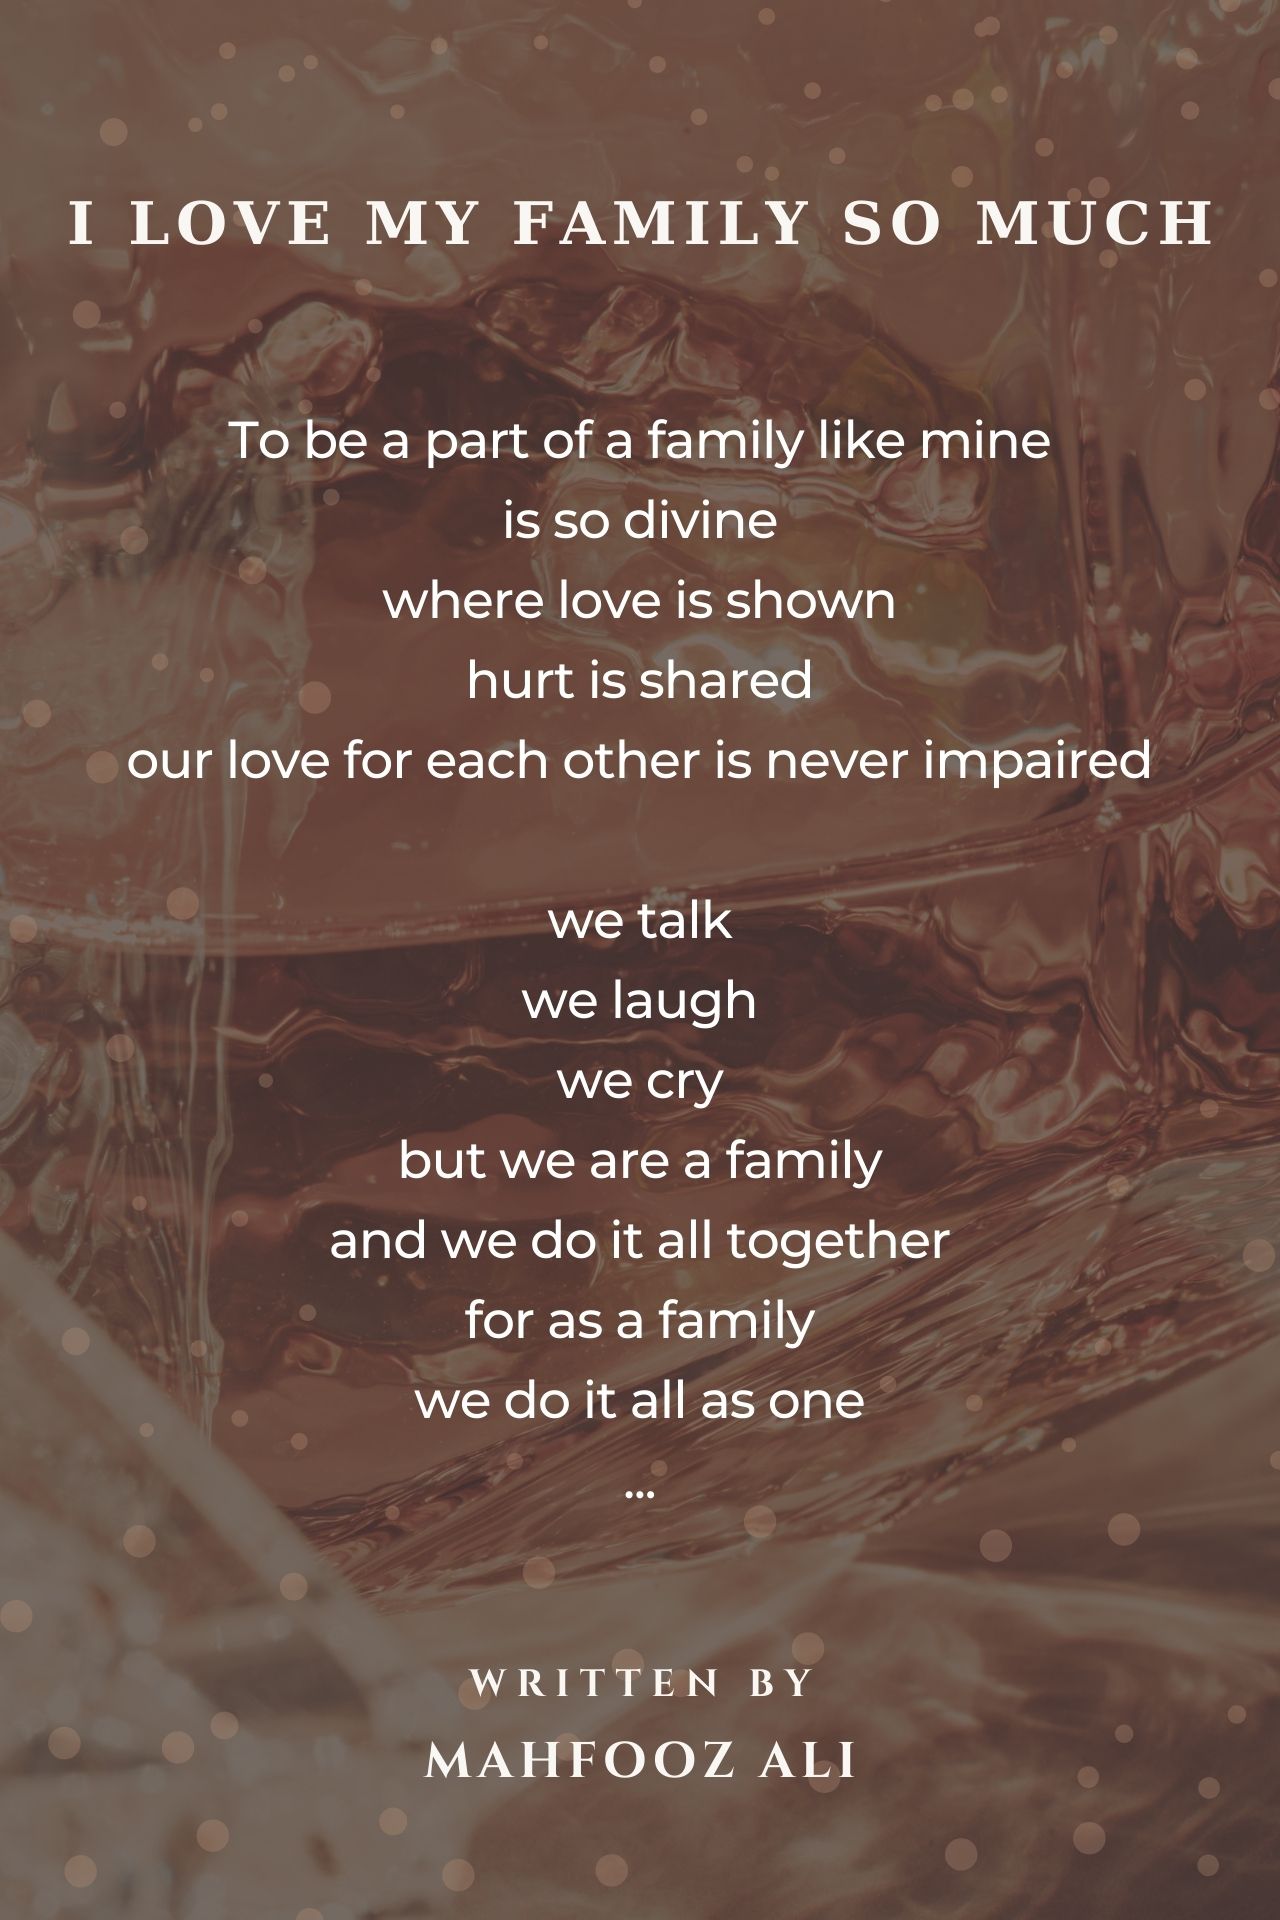 I Love My Family So Much. - I Love My Family So Much. Poem by Mahfooz Ali